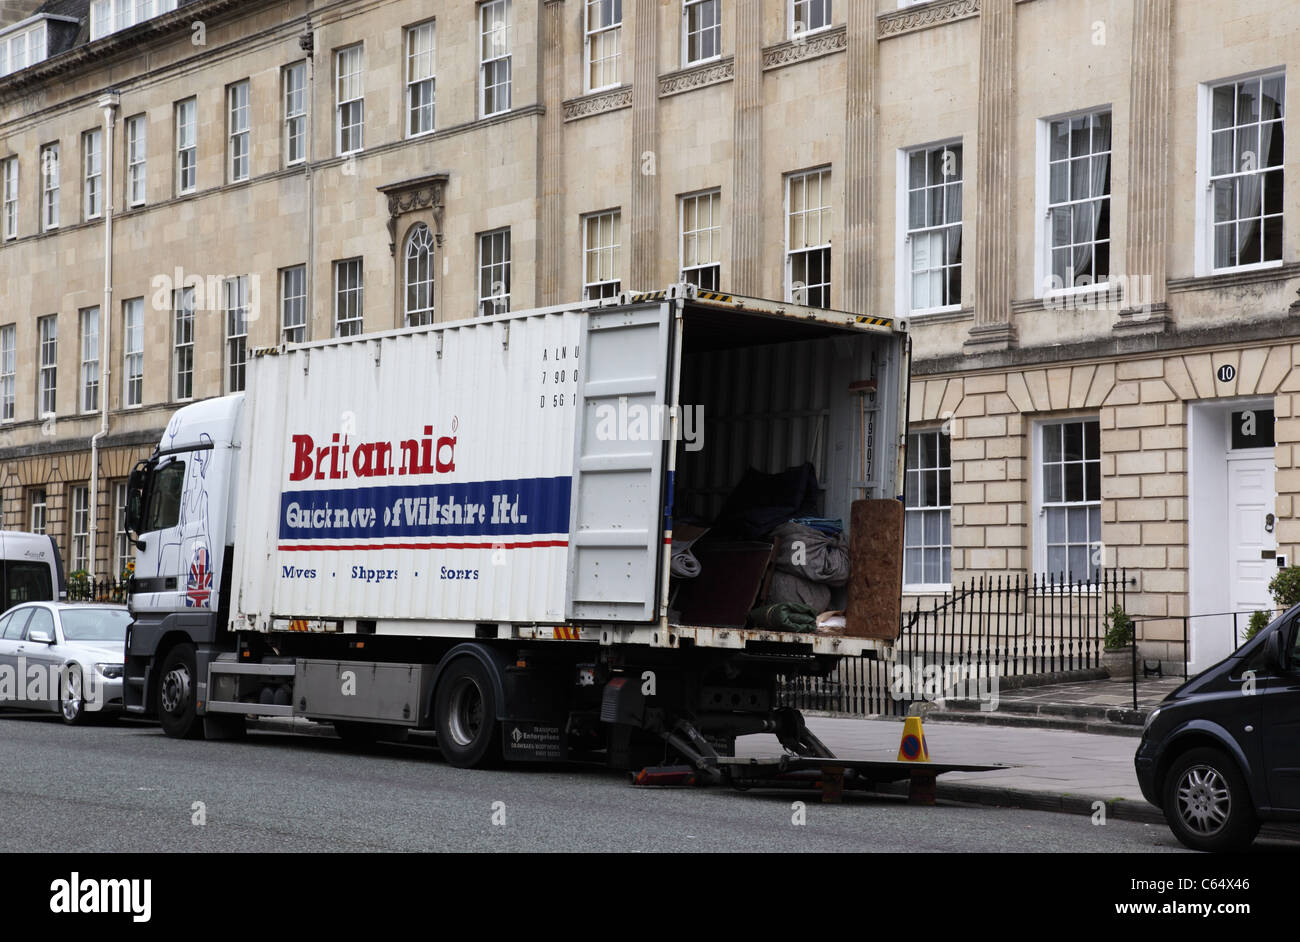 Removal van in Great Pulteney Street, Bath, Somerset, England, UK Stock Photo